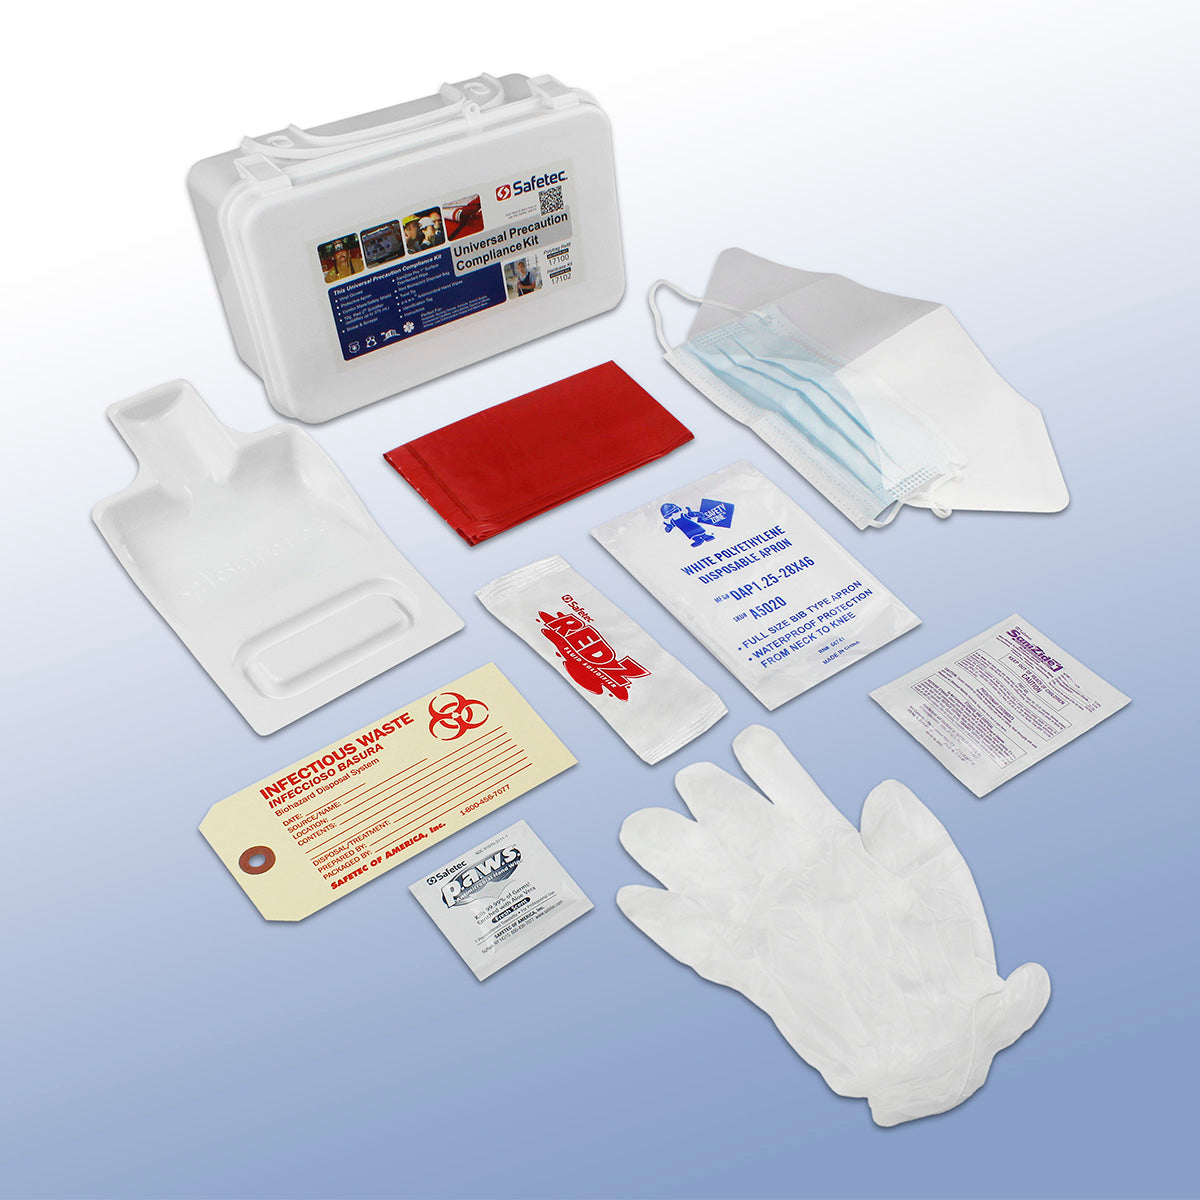 SafeTec - Universal Precaution Compliance Kit data-zoom=